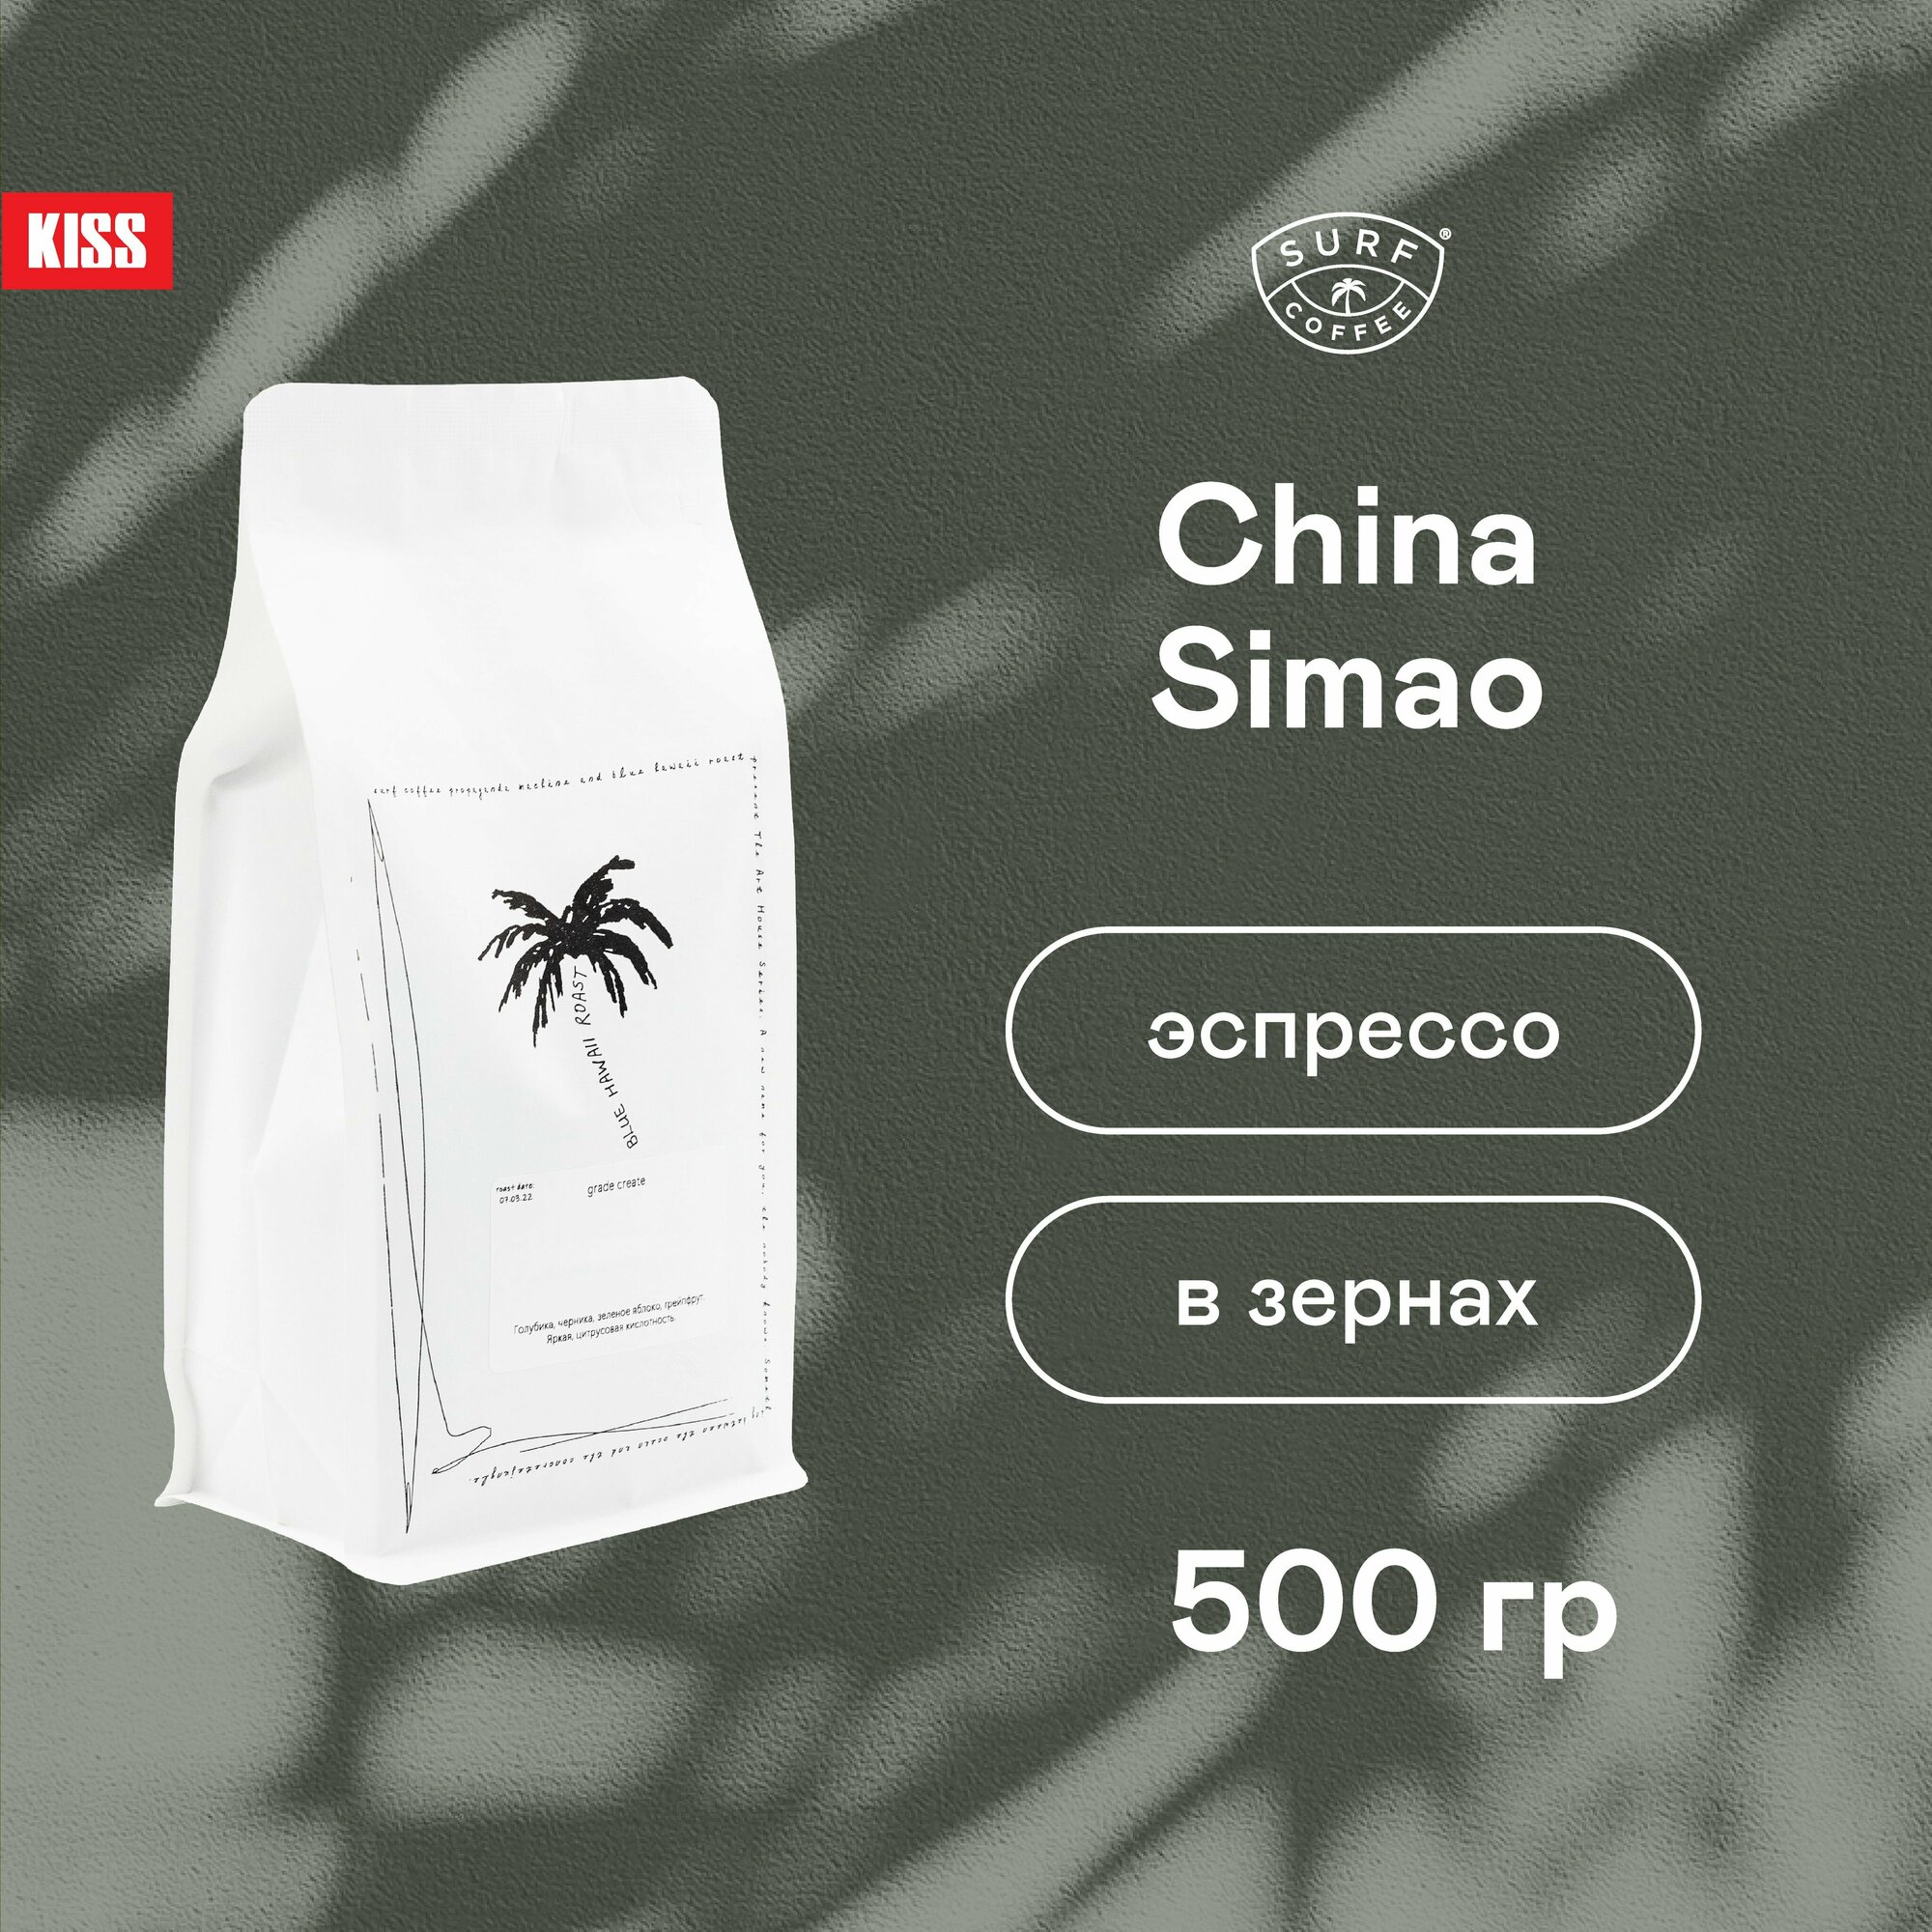 Кофе в зернах Surf Coffee China Simao, 500 гр